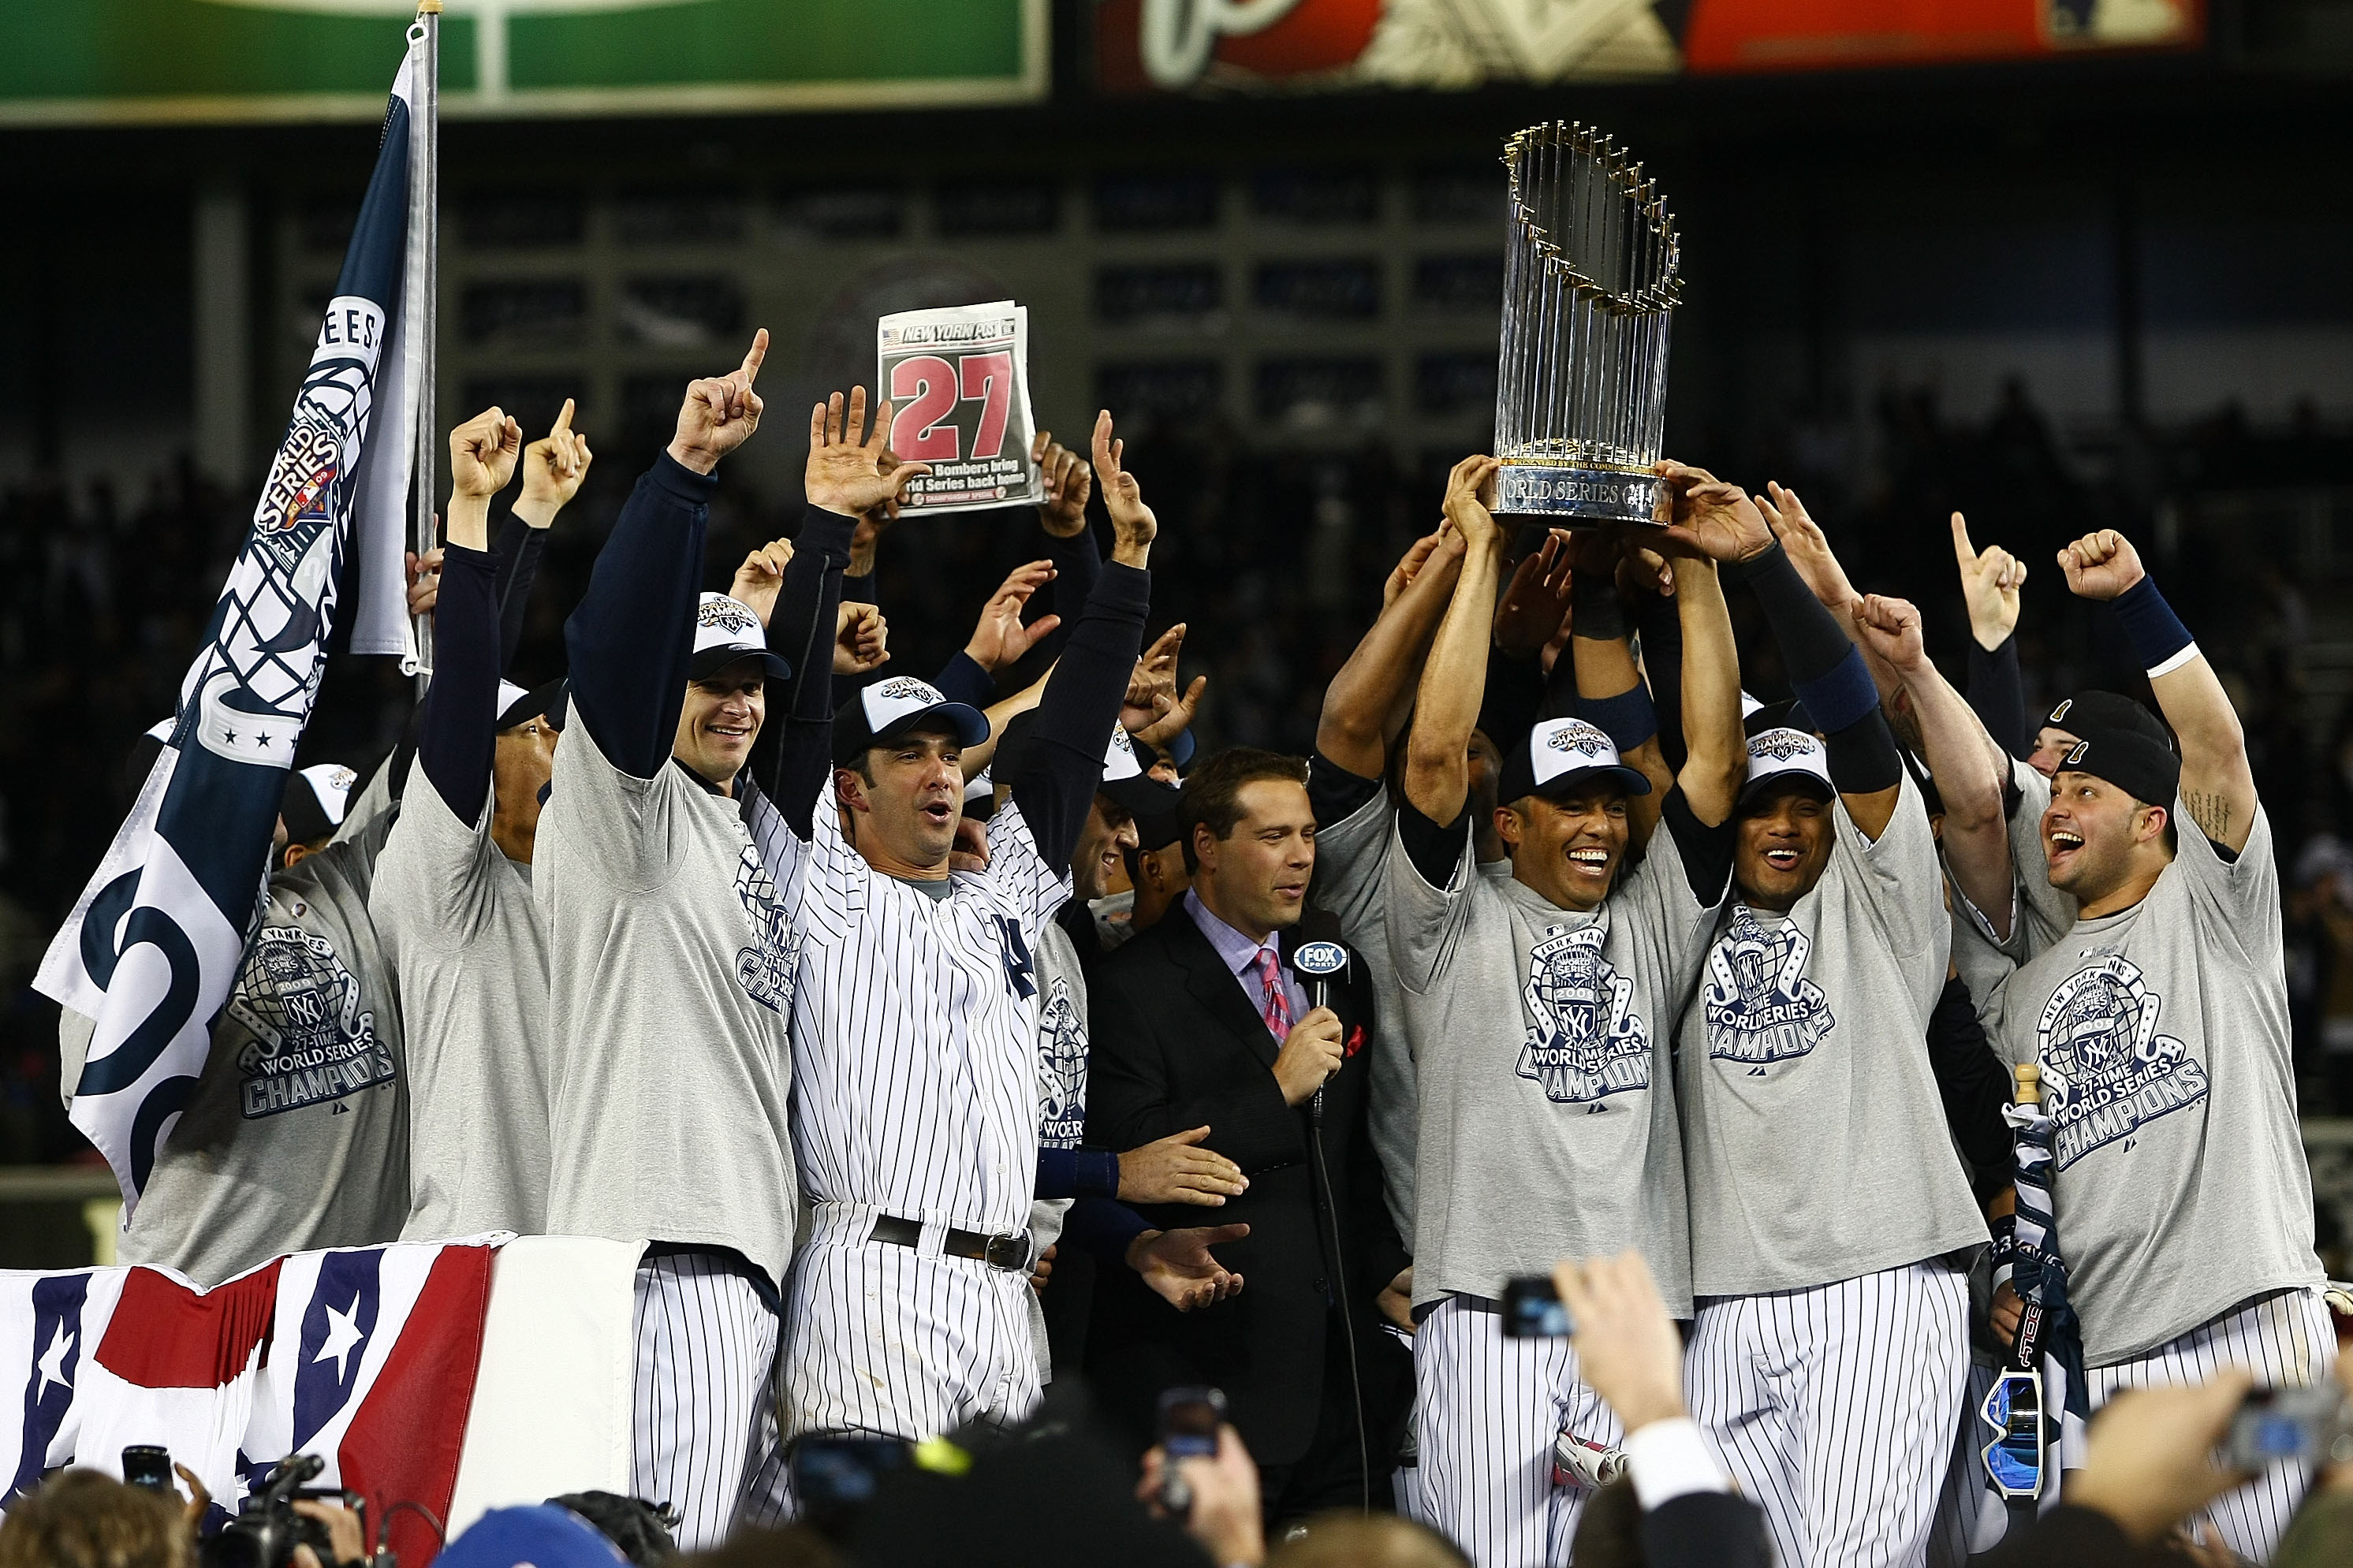 Anatomy of a Champion: Examining last 10 World Series champions